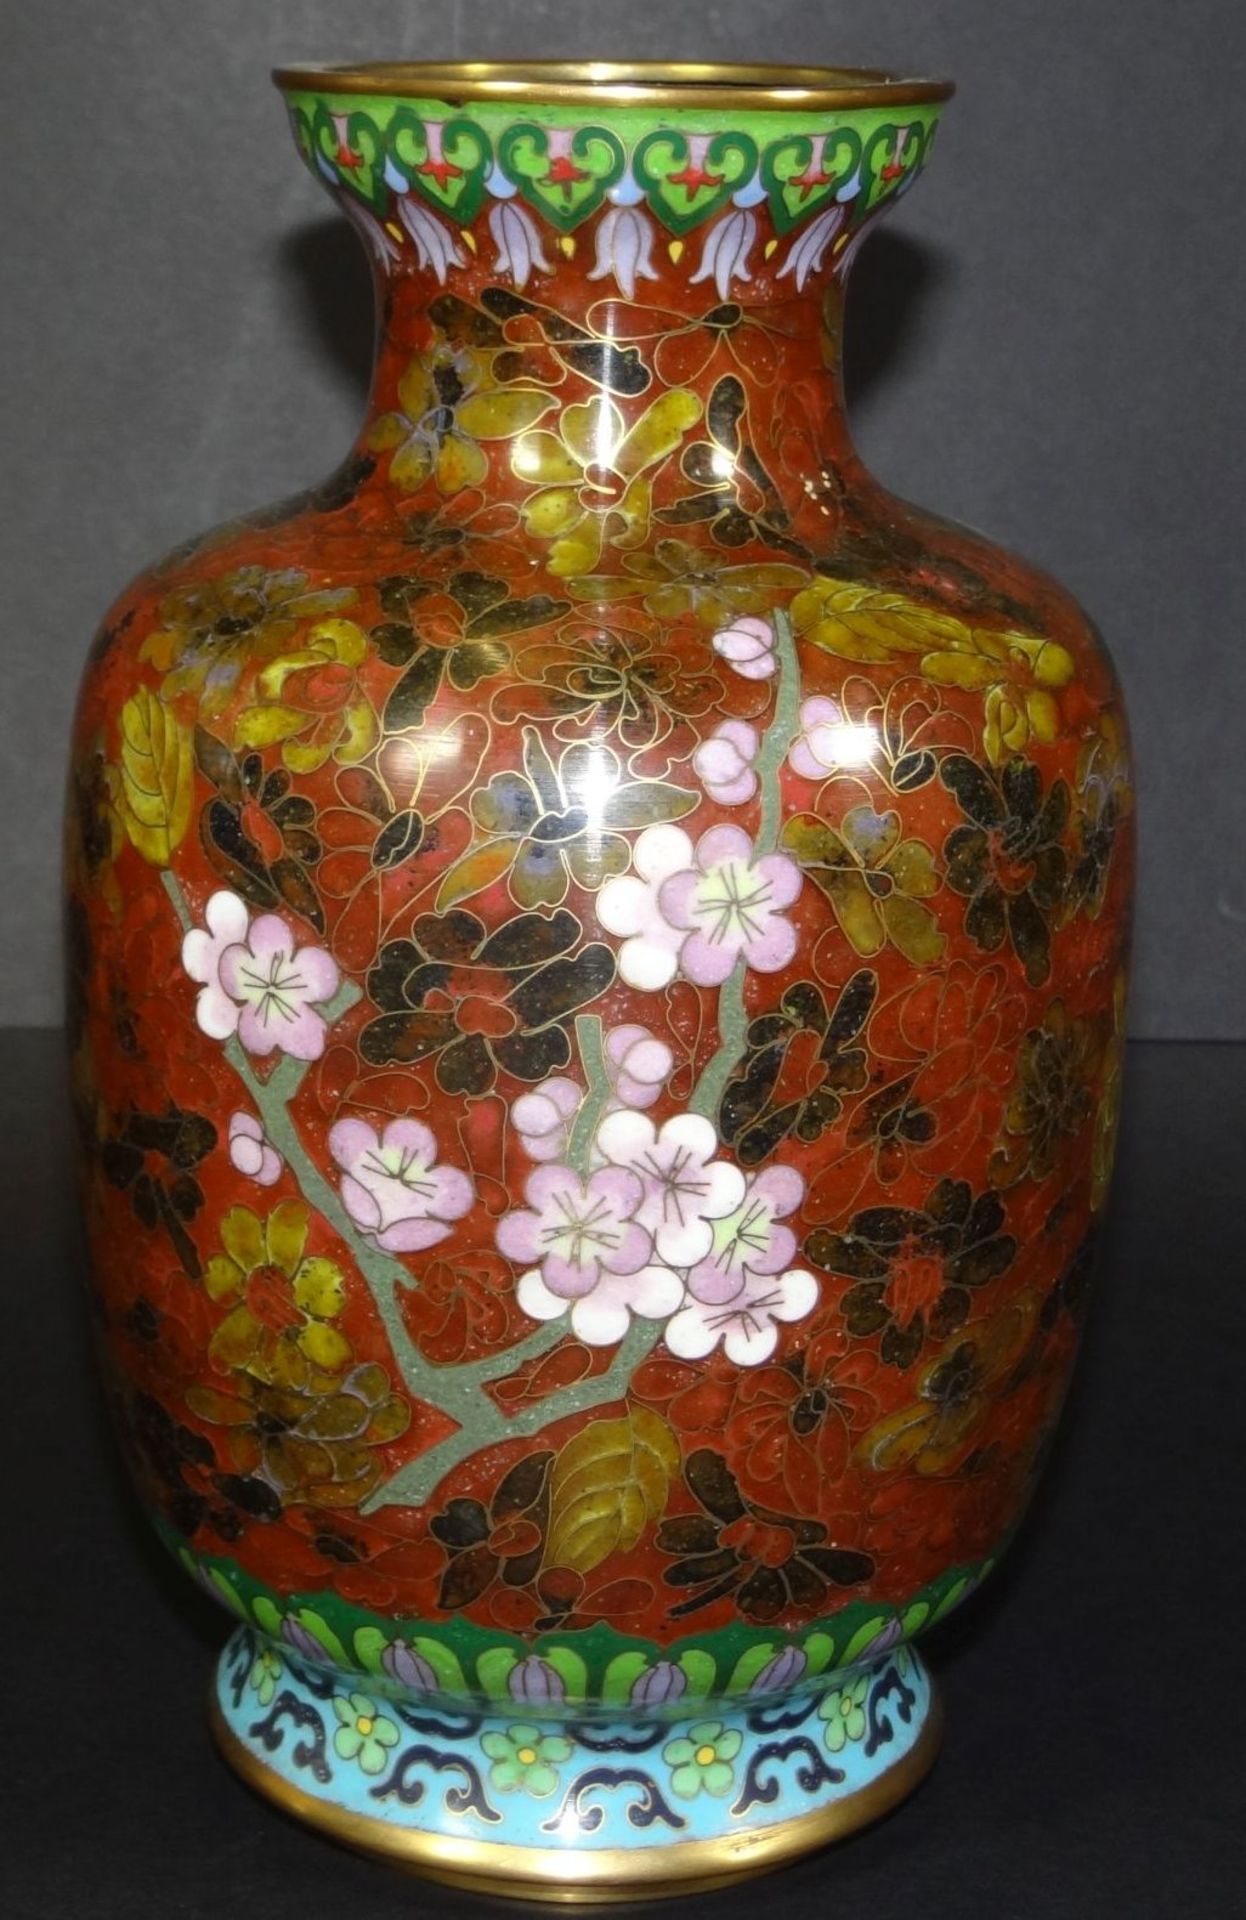 Cloisonne-Vase mit floralen Dekor, China, H-21 cm - Image 3 of 5